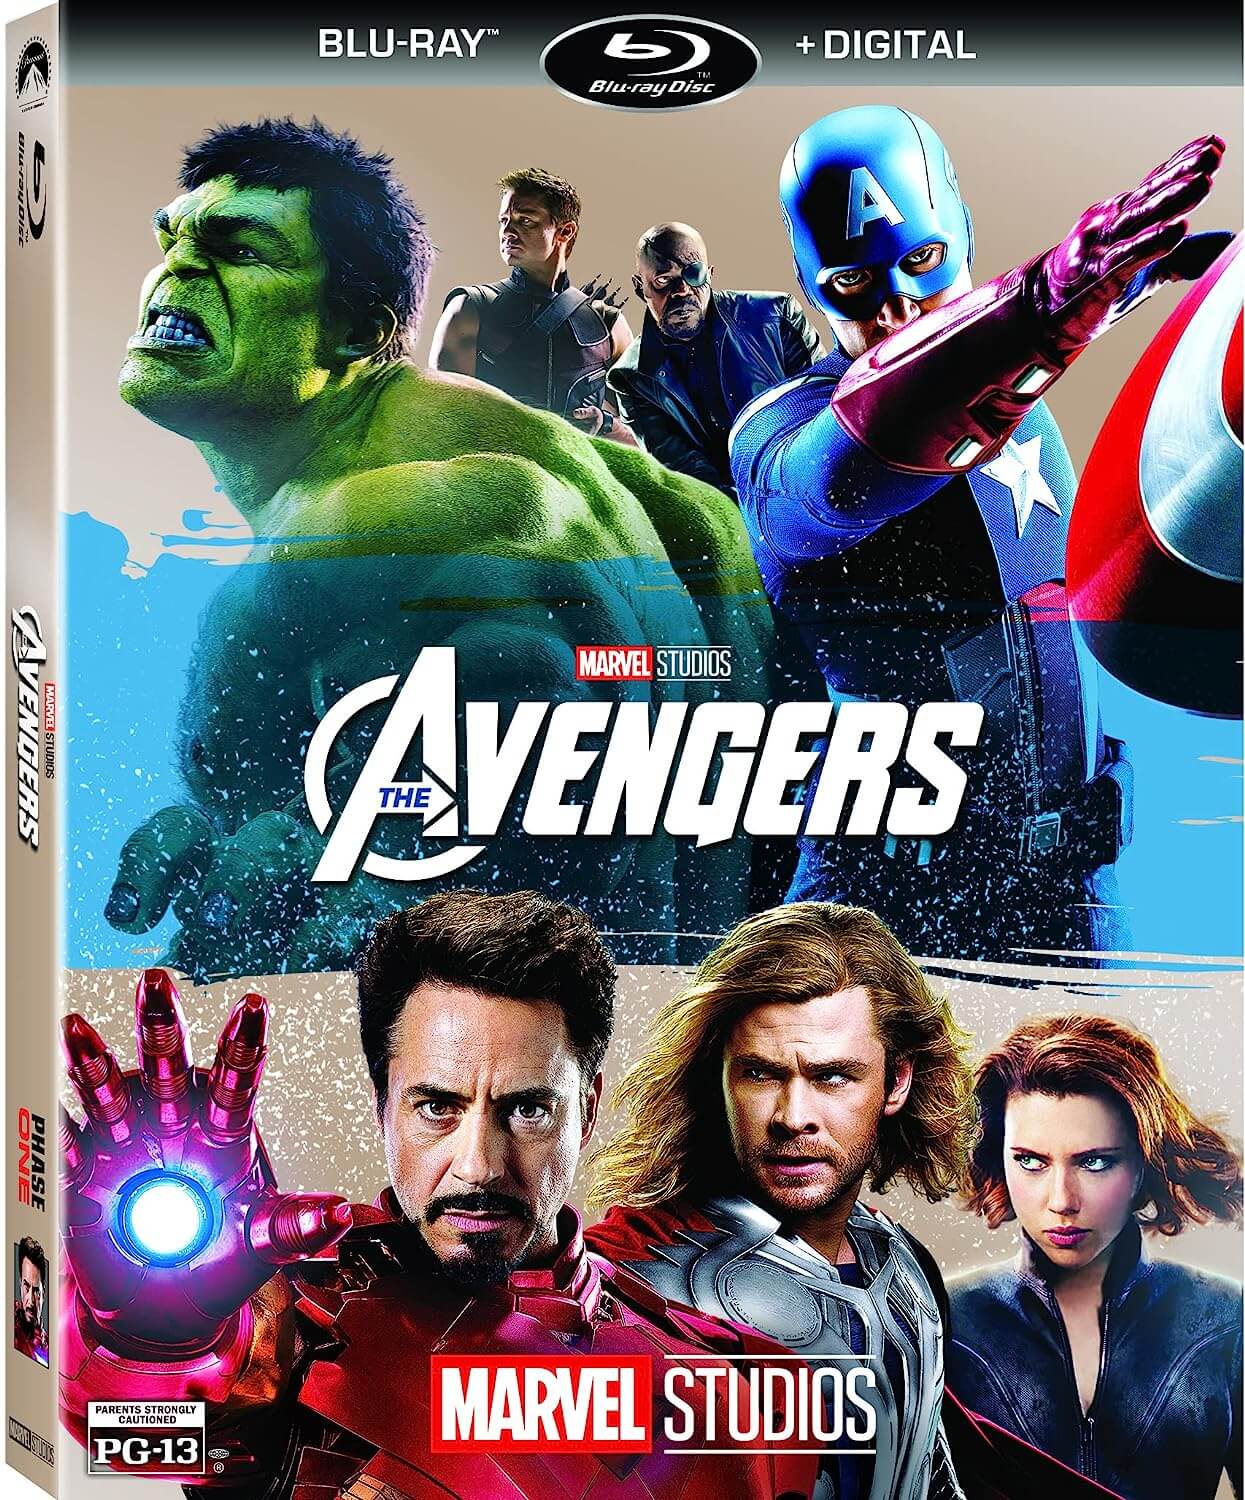 "The Avengers" (2012)